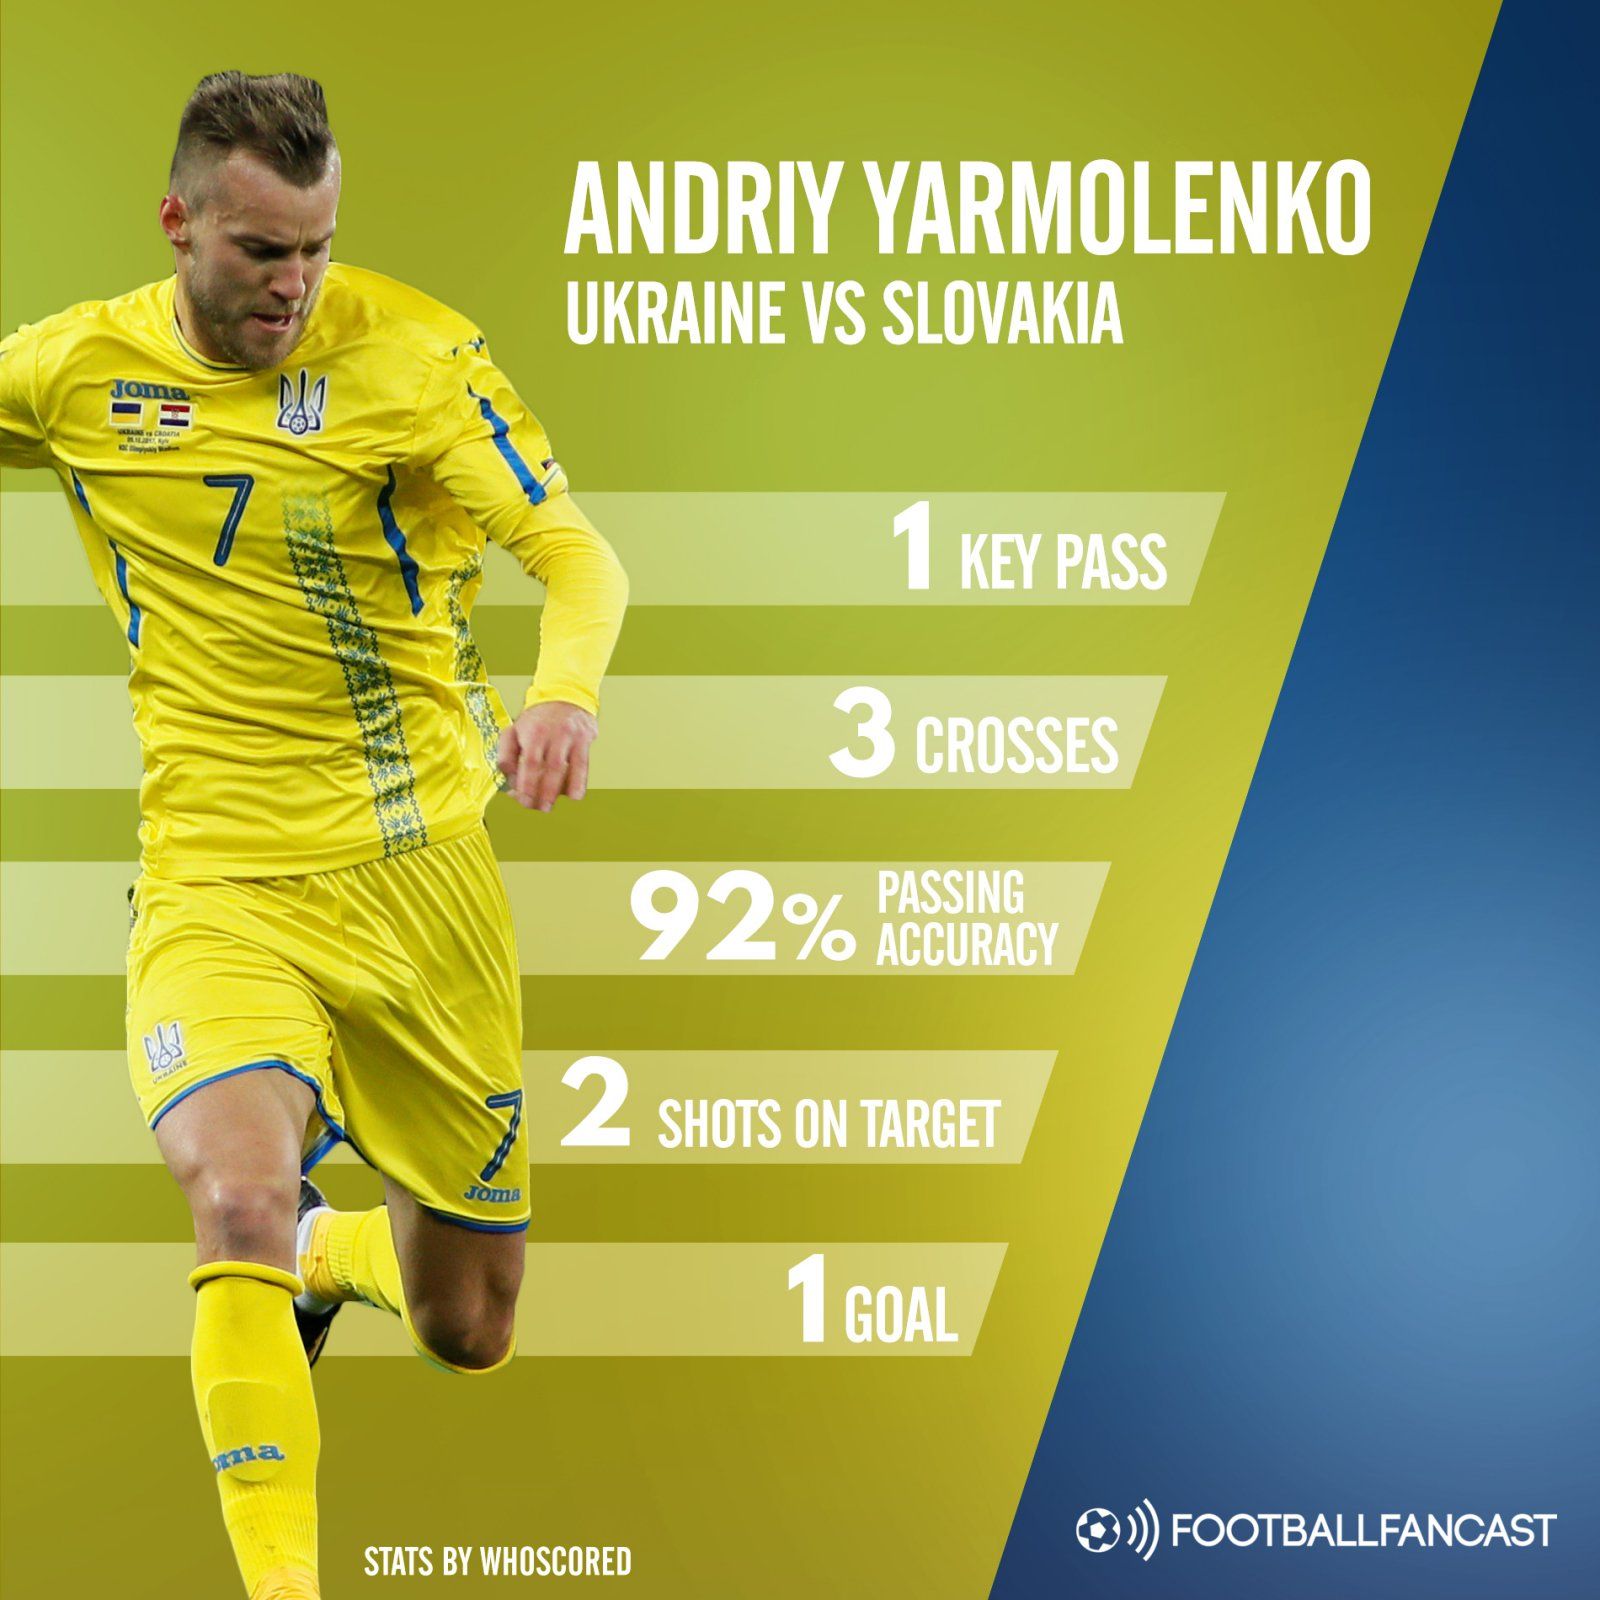 West Ham winger Andriy Yarmolenko's stats for Ukraine vs Slovakia